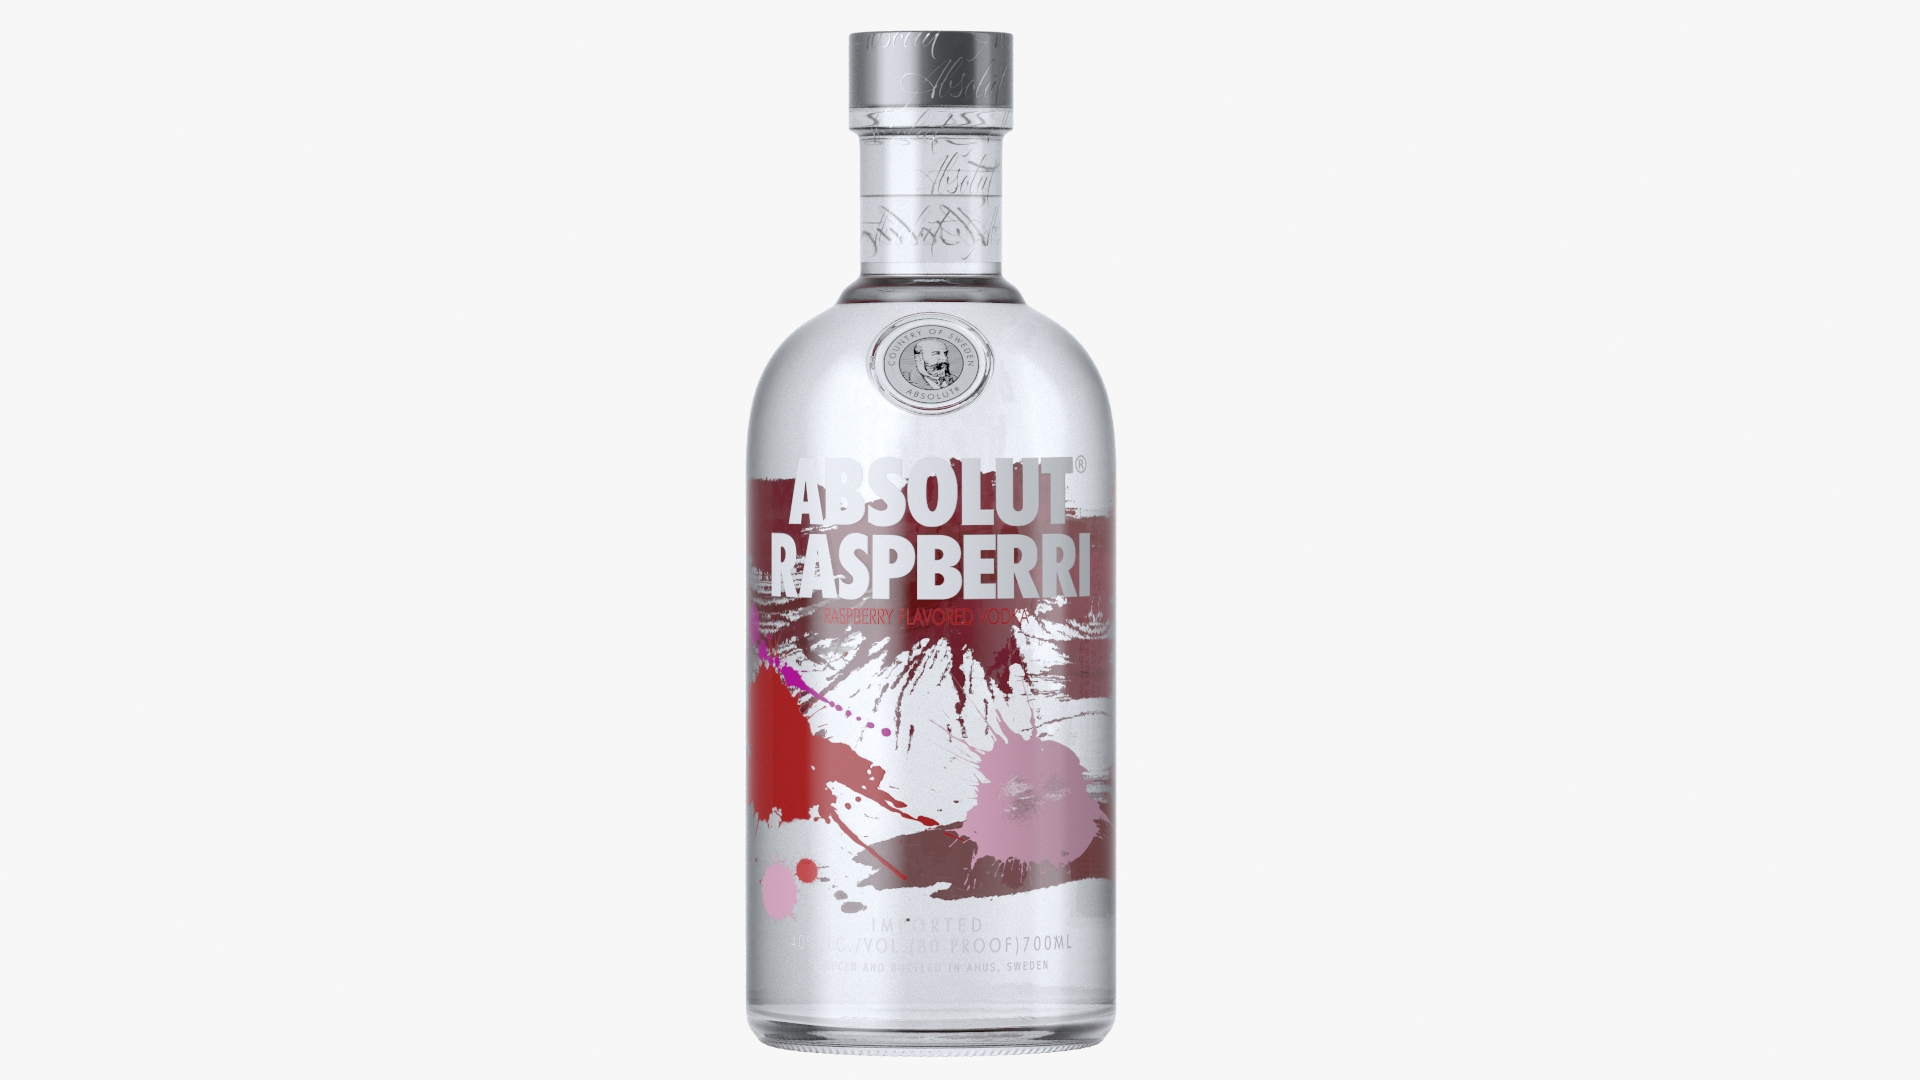 Absolut Raspberri Vodka